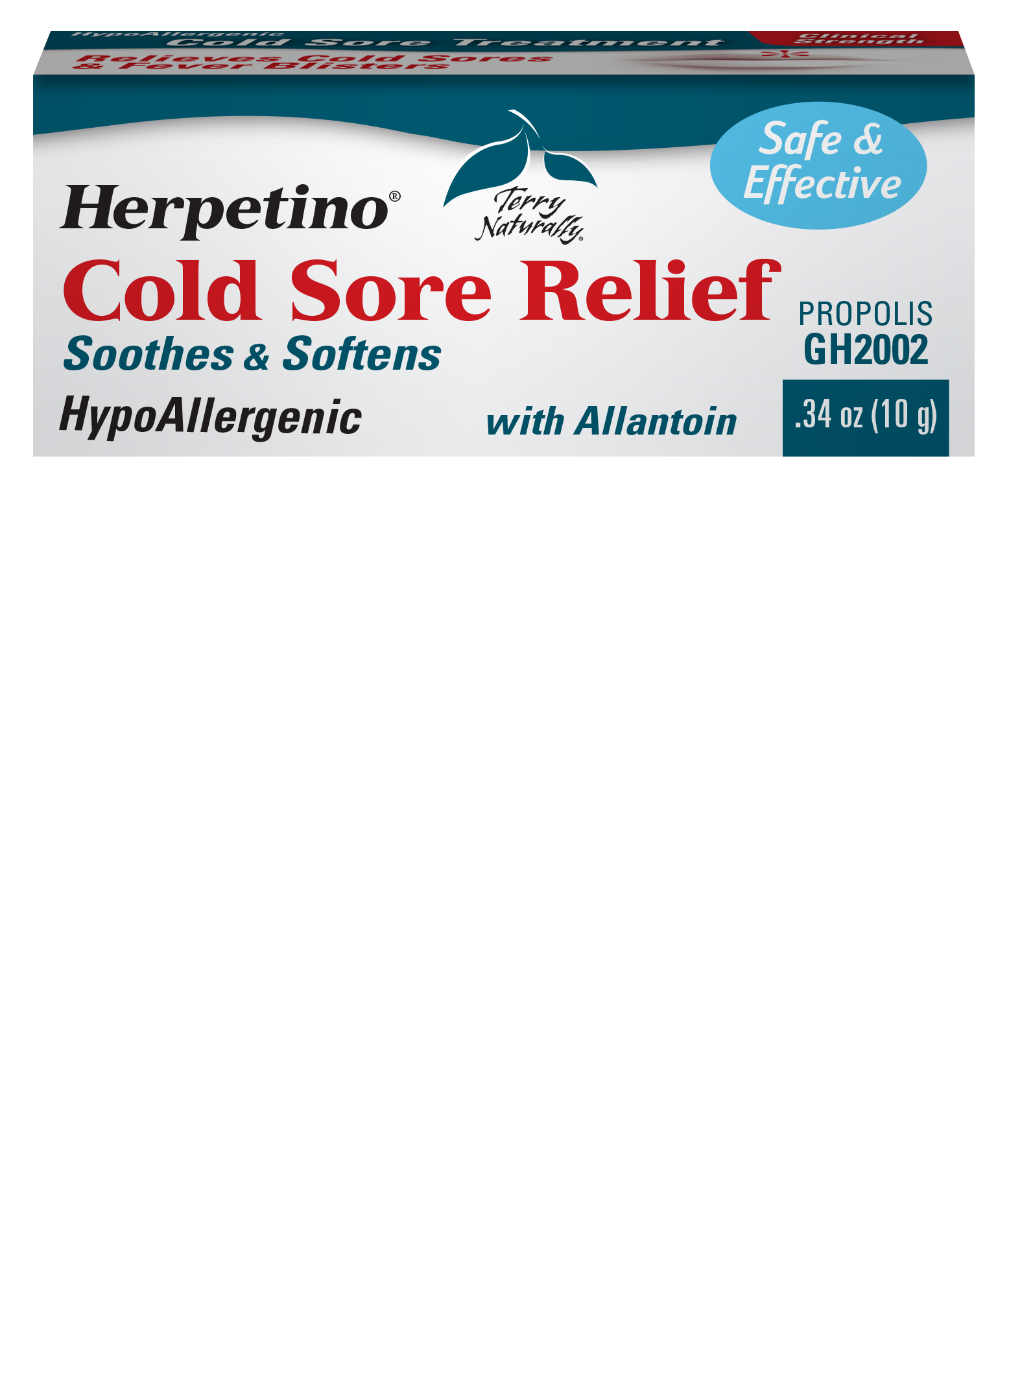 Europharma / Terry Naturally: Herpetino Cold Sore relief 10g (0.34oz)